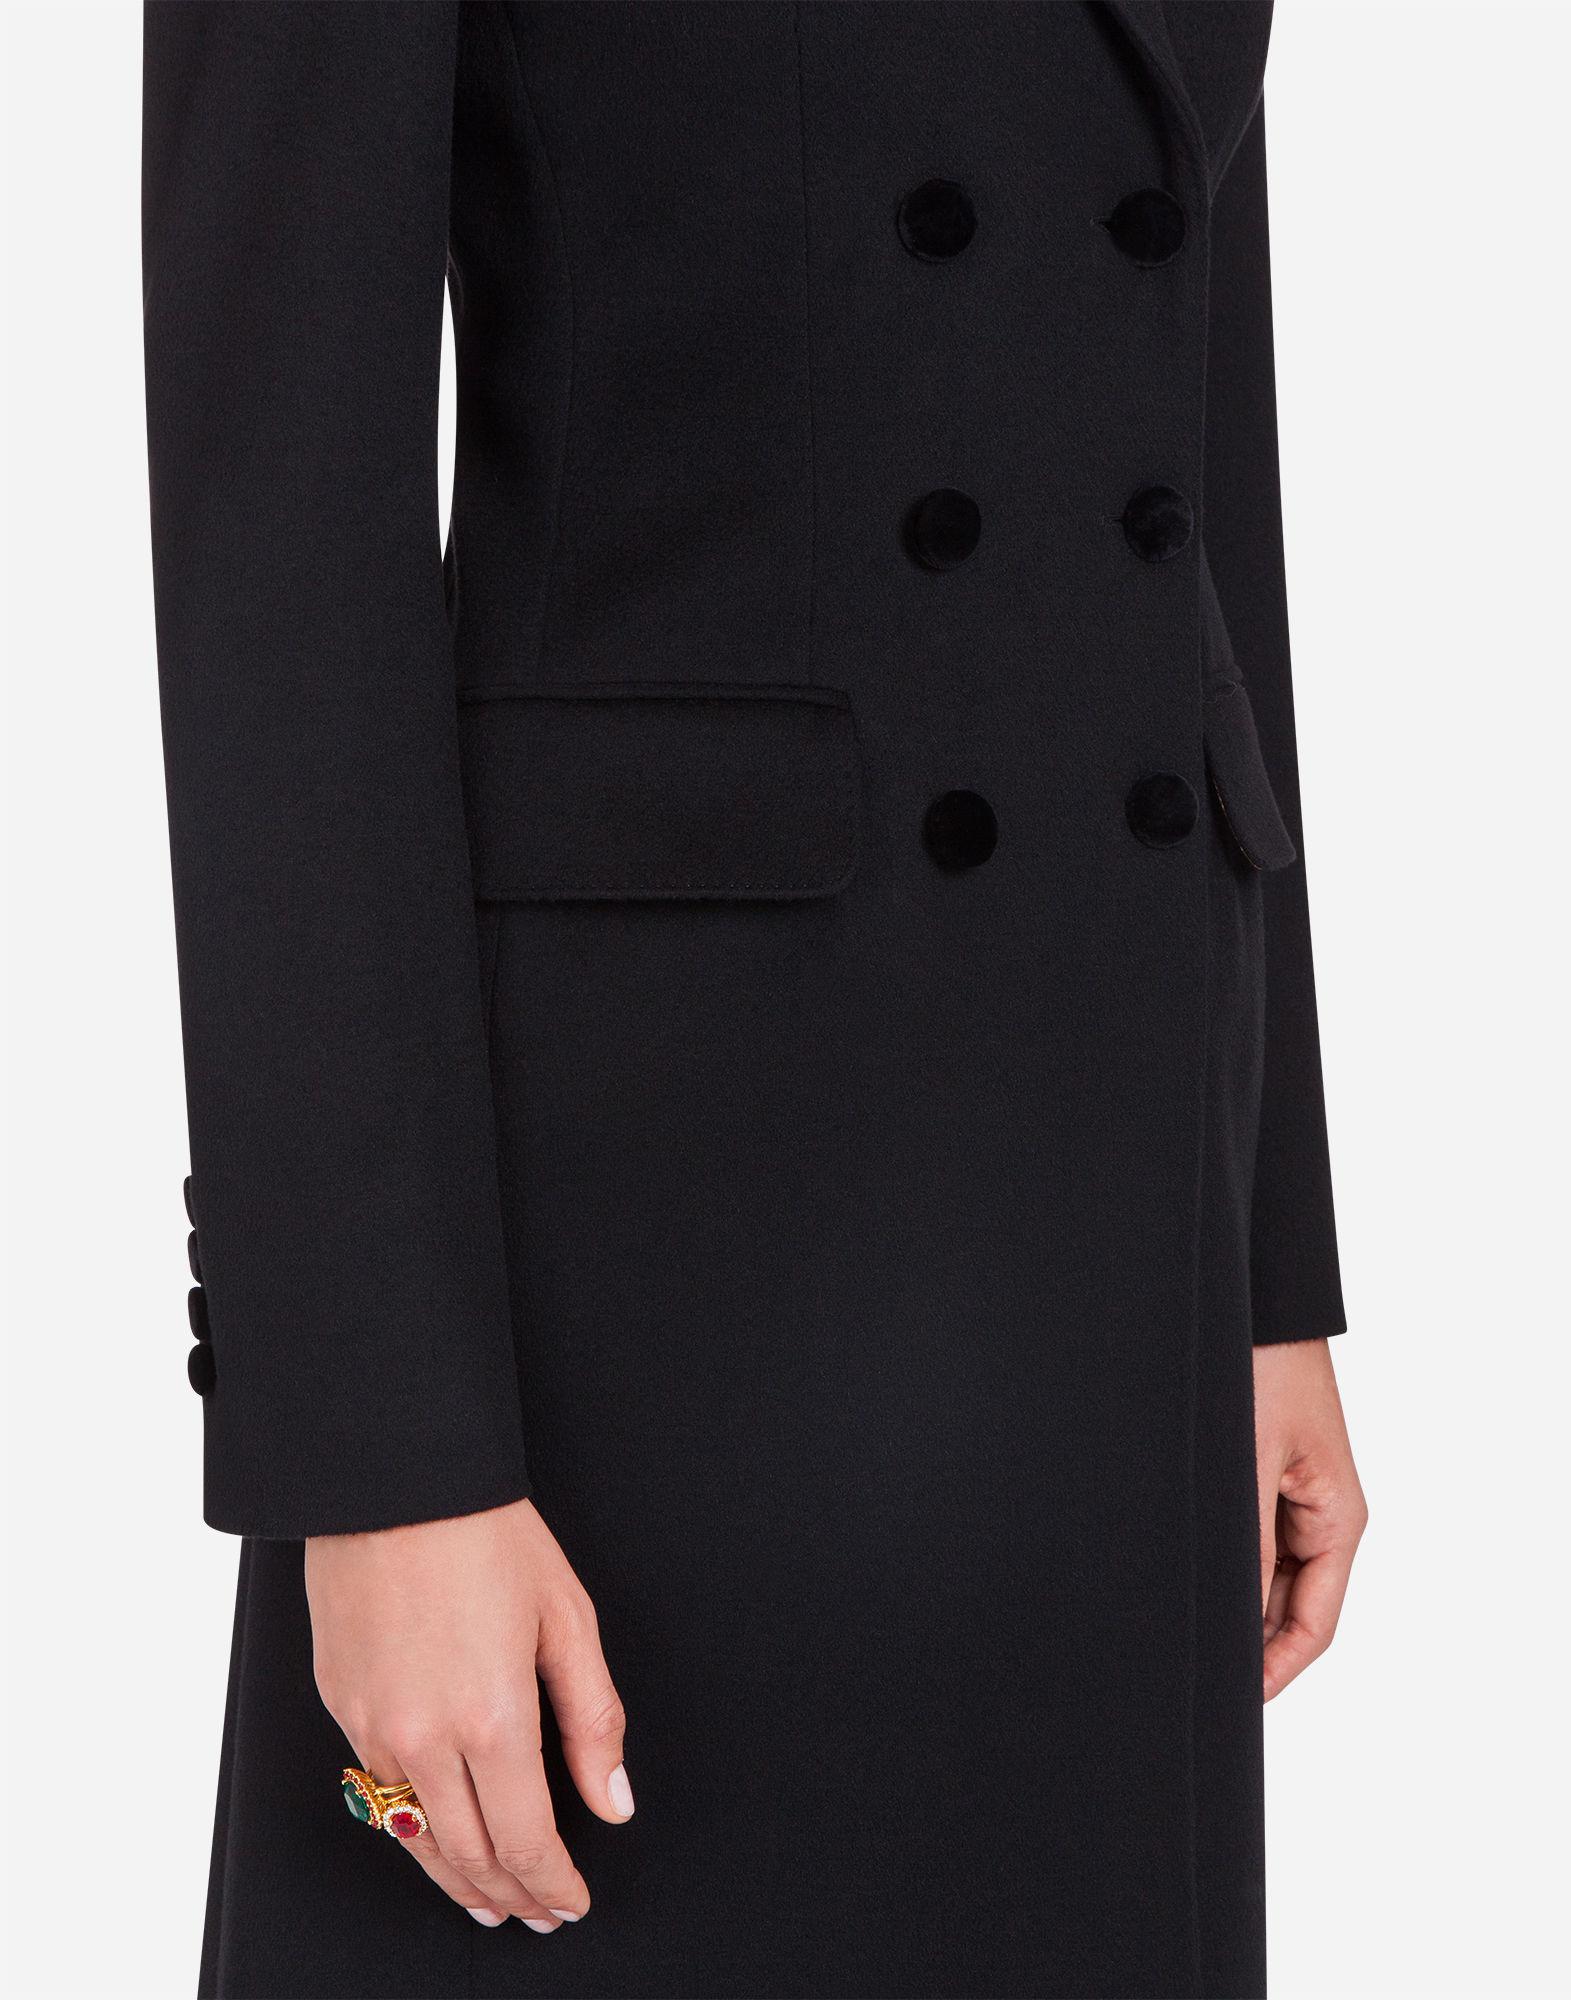 Save 45% Dolce & Gabbana Wool And Cashmere Coat in Black Womens Coats Dolce & Gabbana Coats 